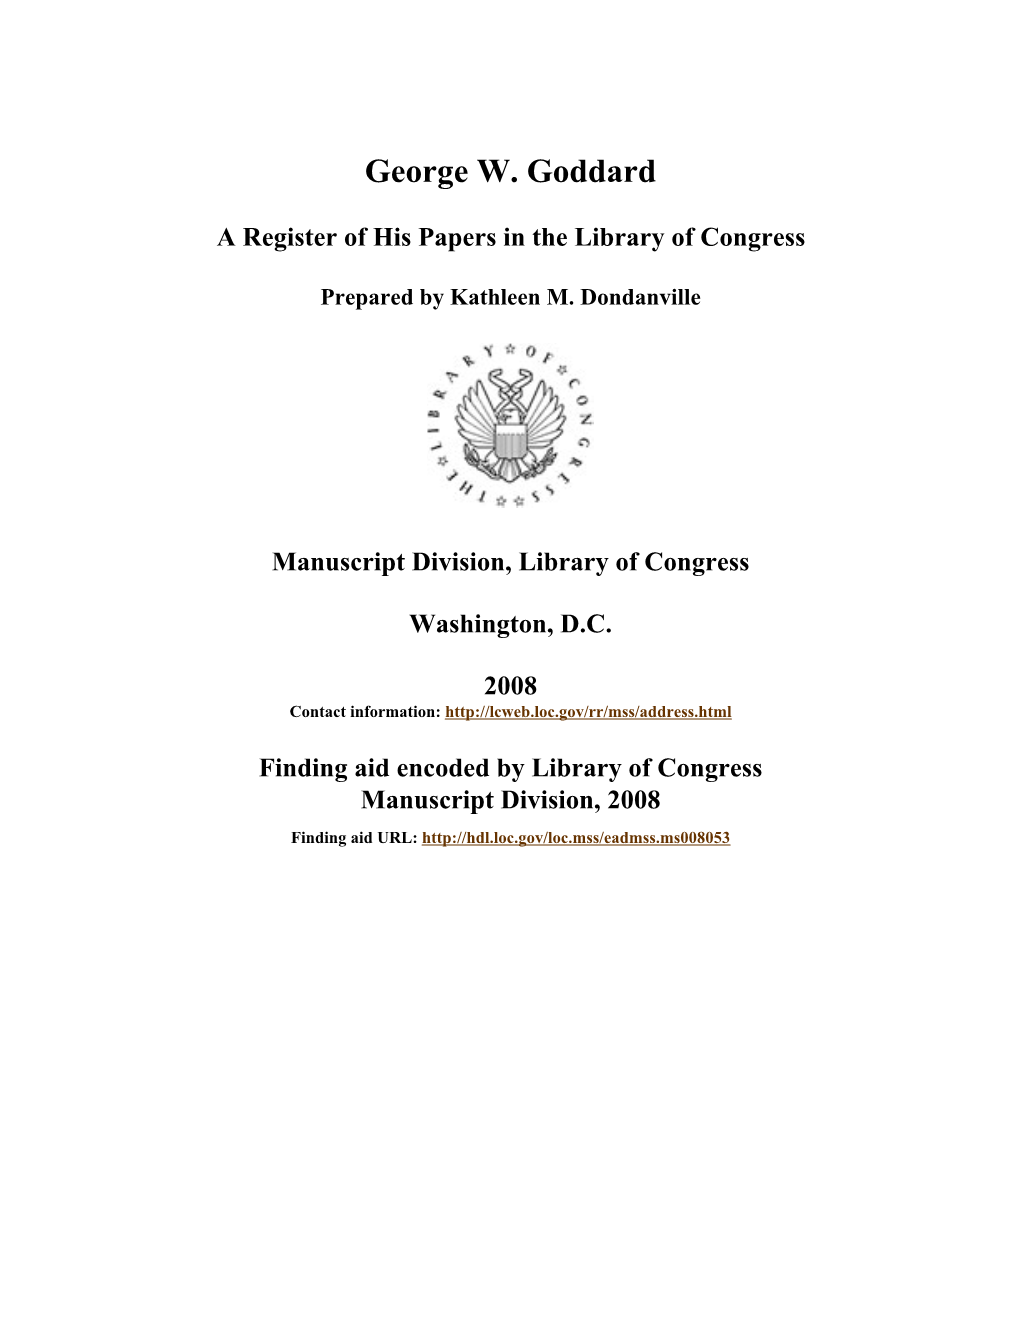 George W. Goddard Papers